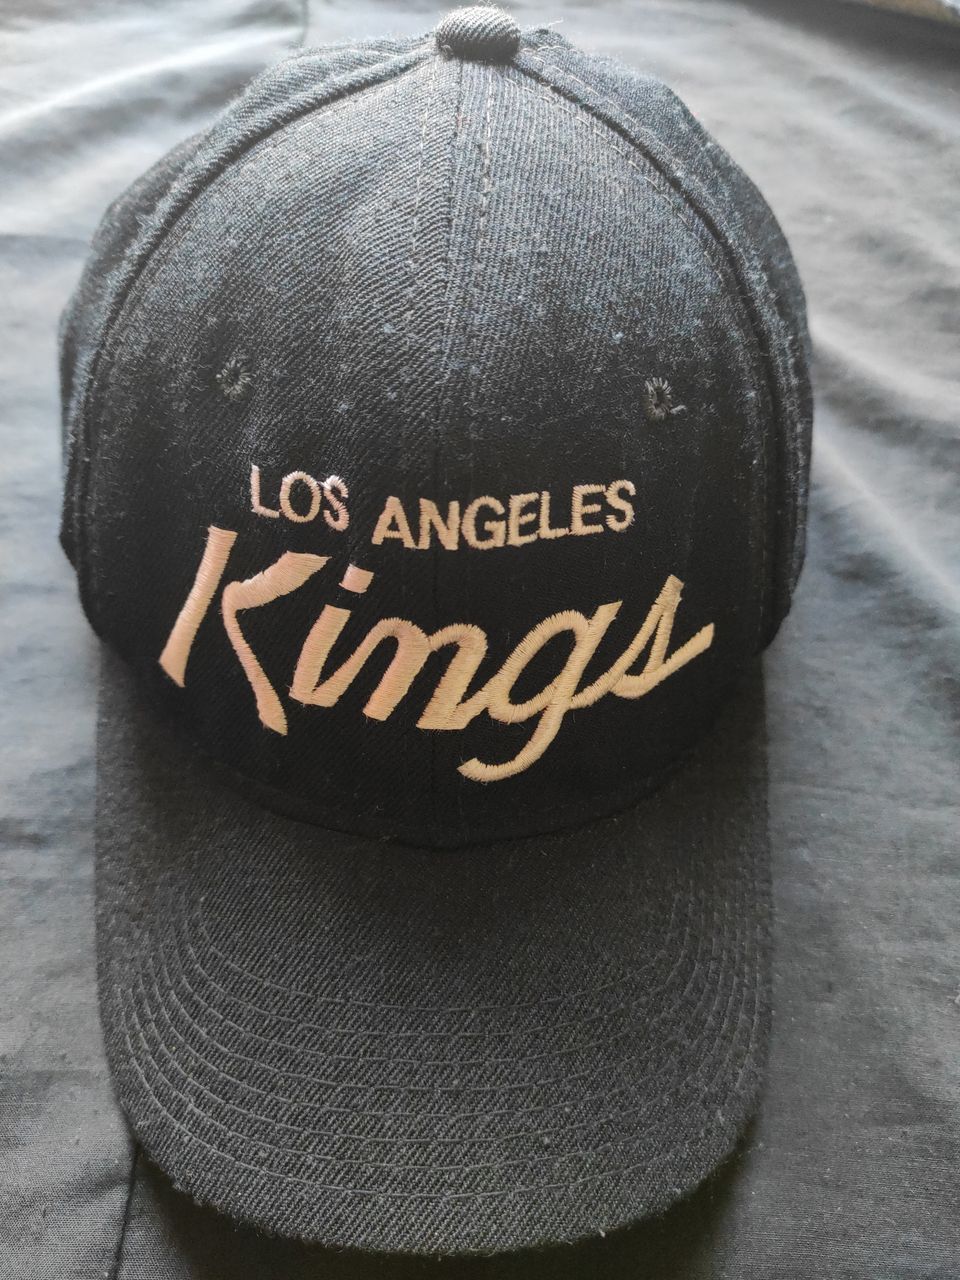 Lippis Los Angeles Kings